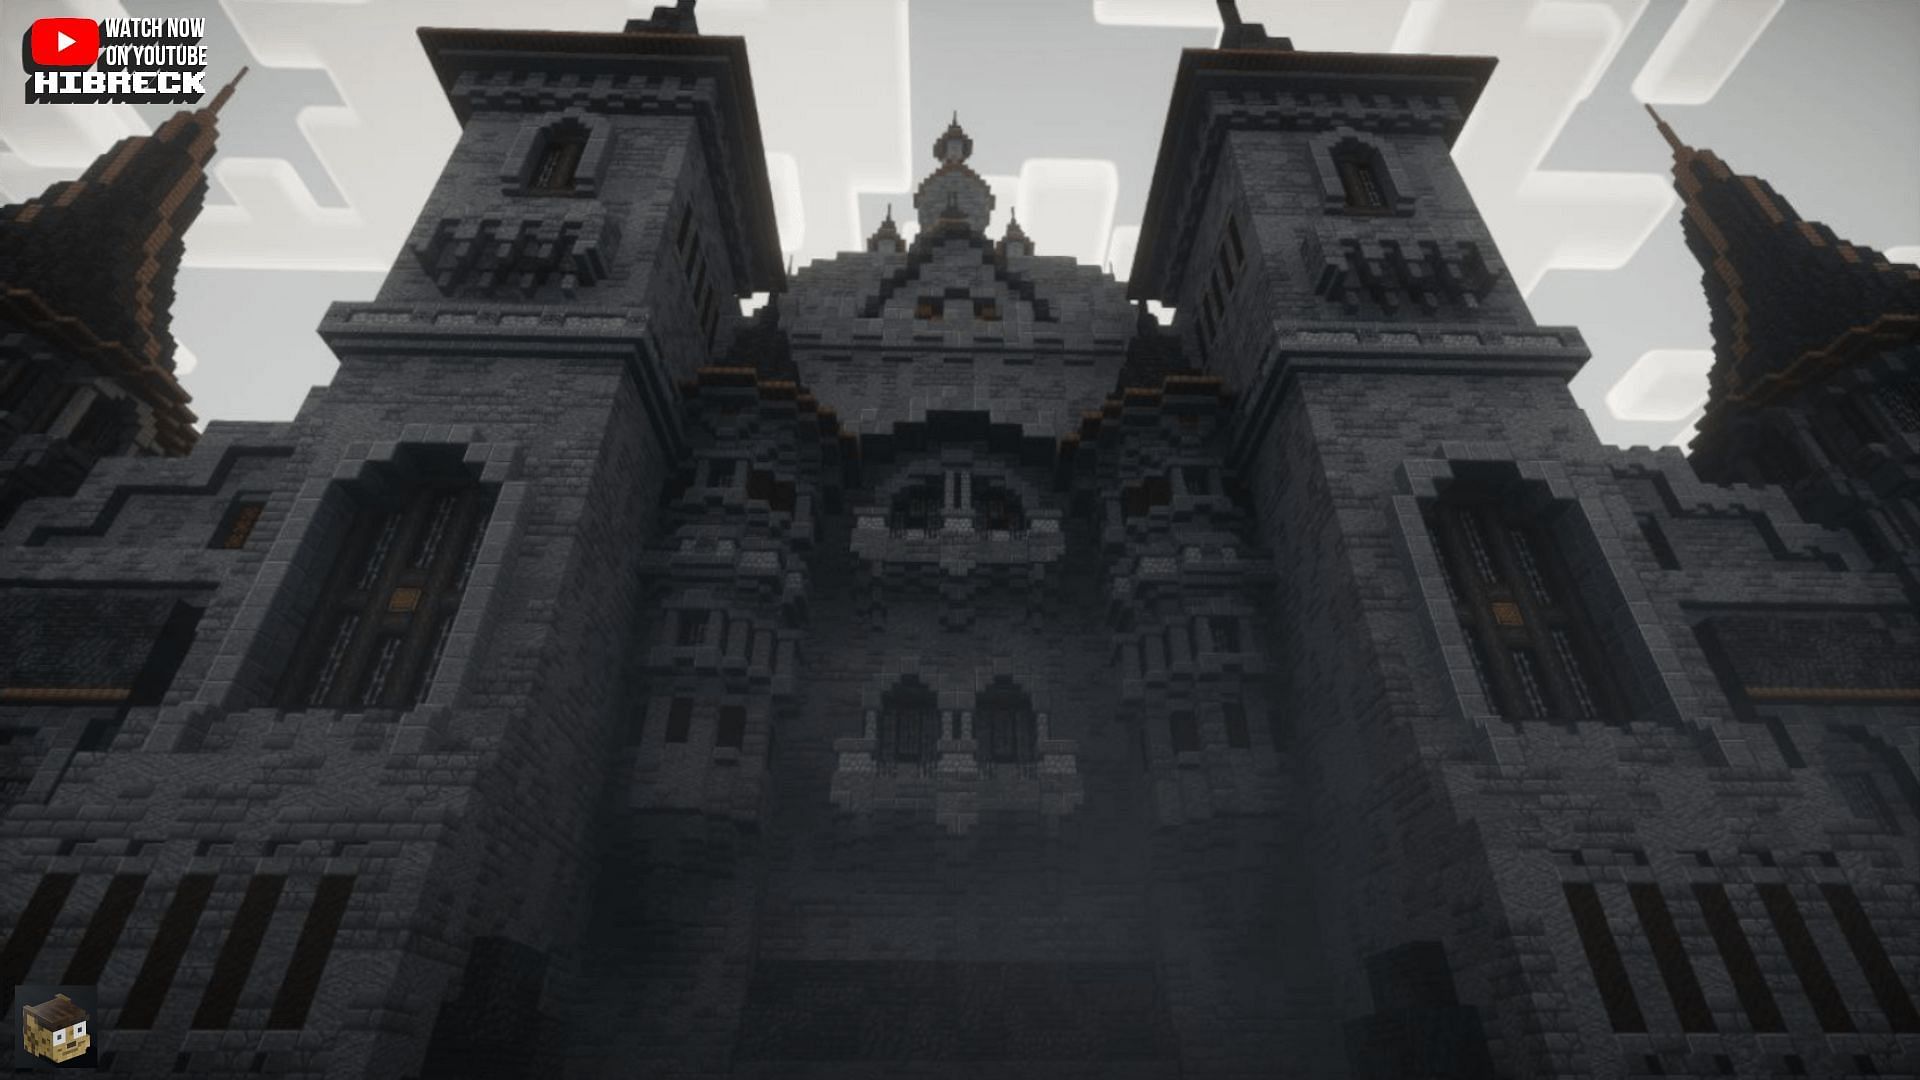 Recreated Dimitrescu Castle (Image via Reddit by u/hibreck)